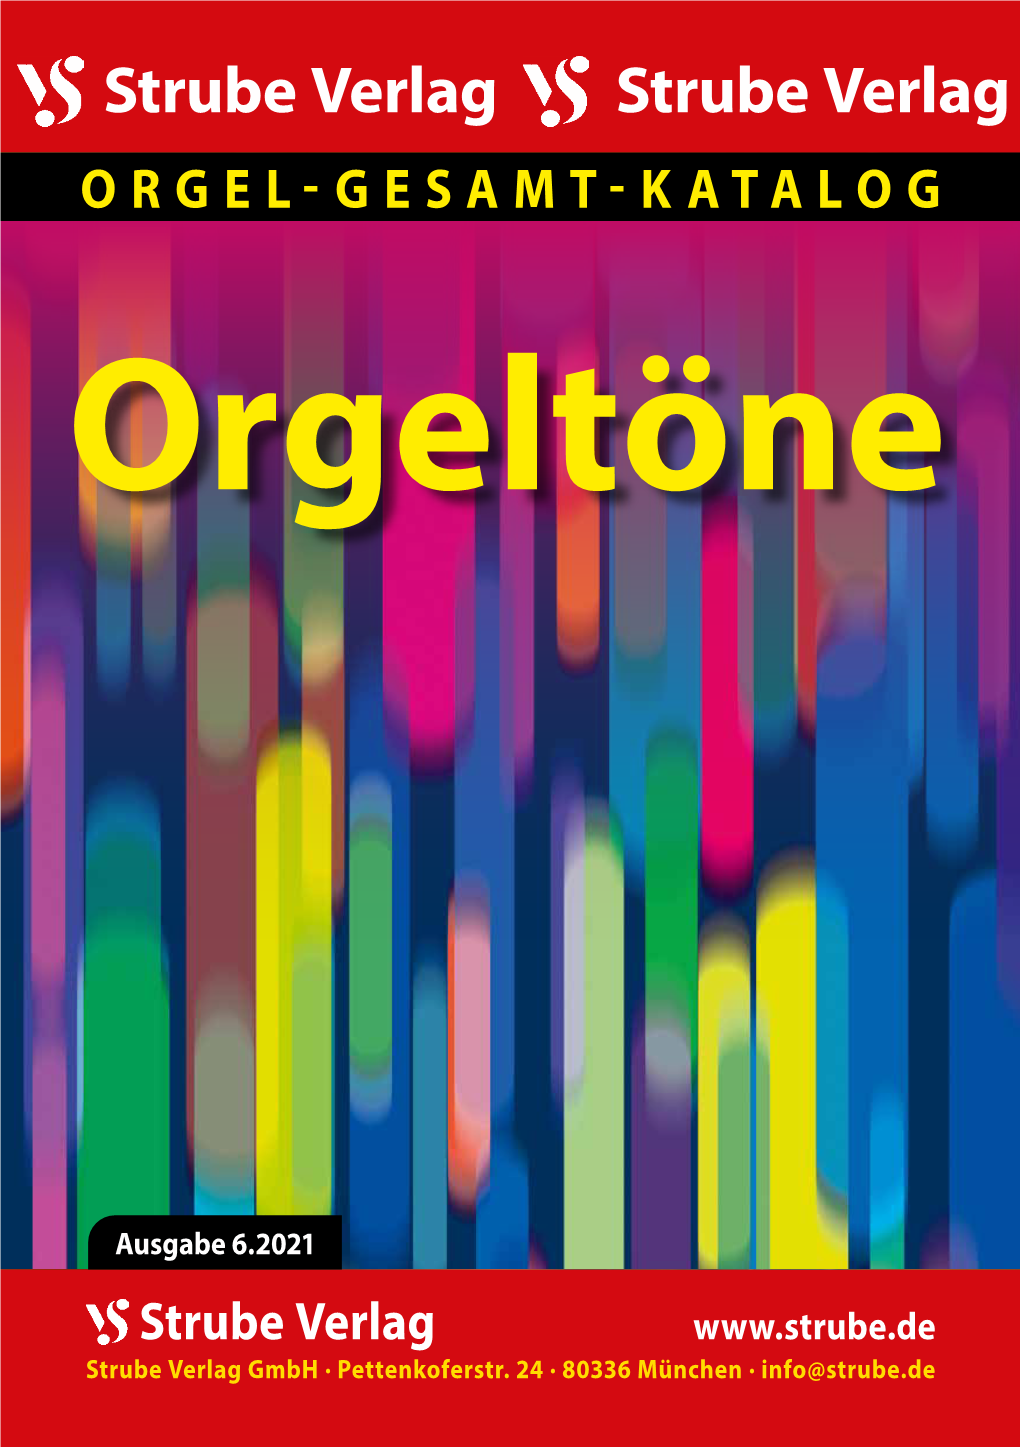 ORGEL-GESAMT-KATALOG Orgeltöne